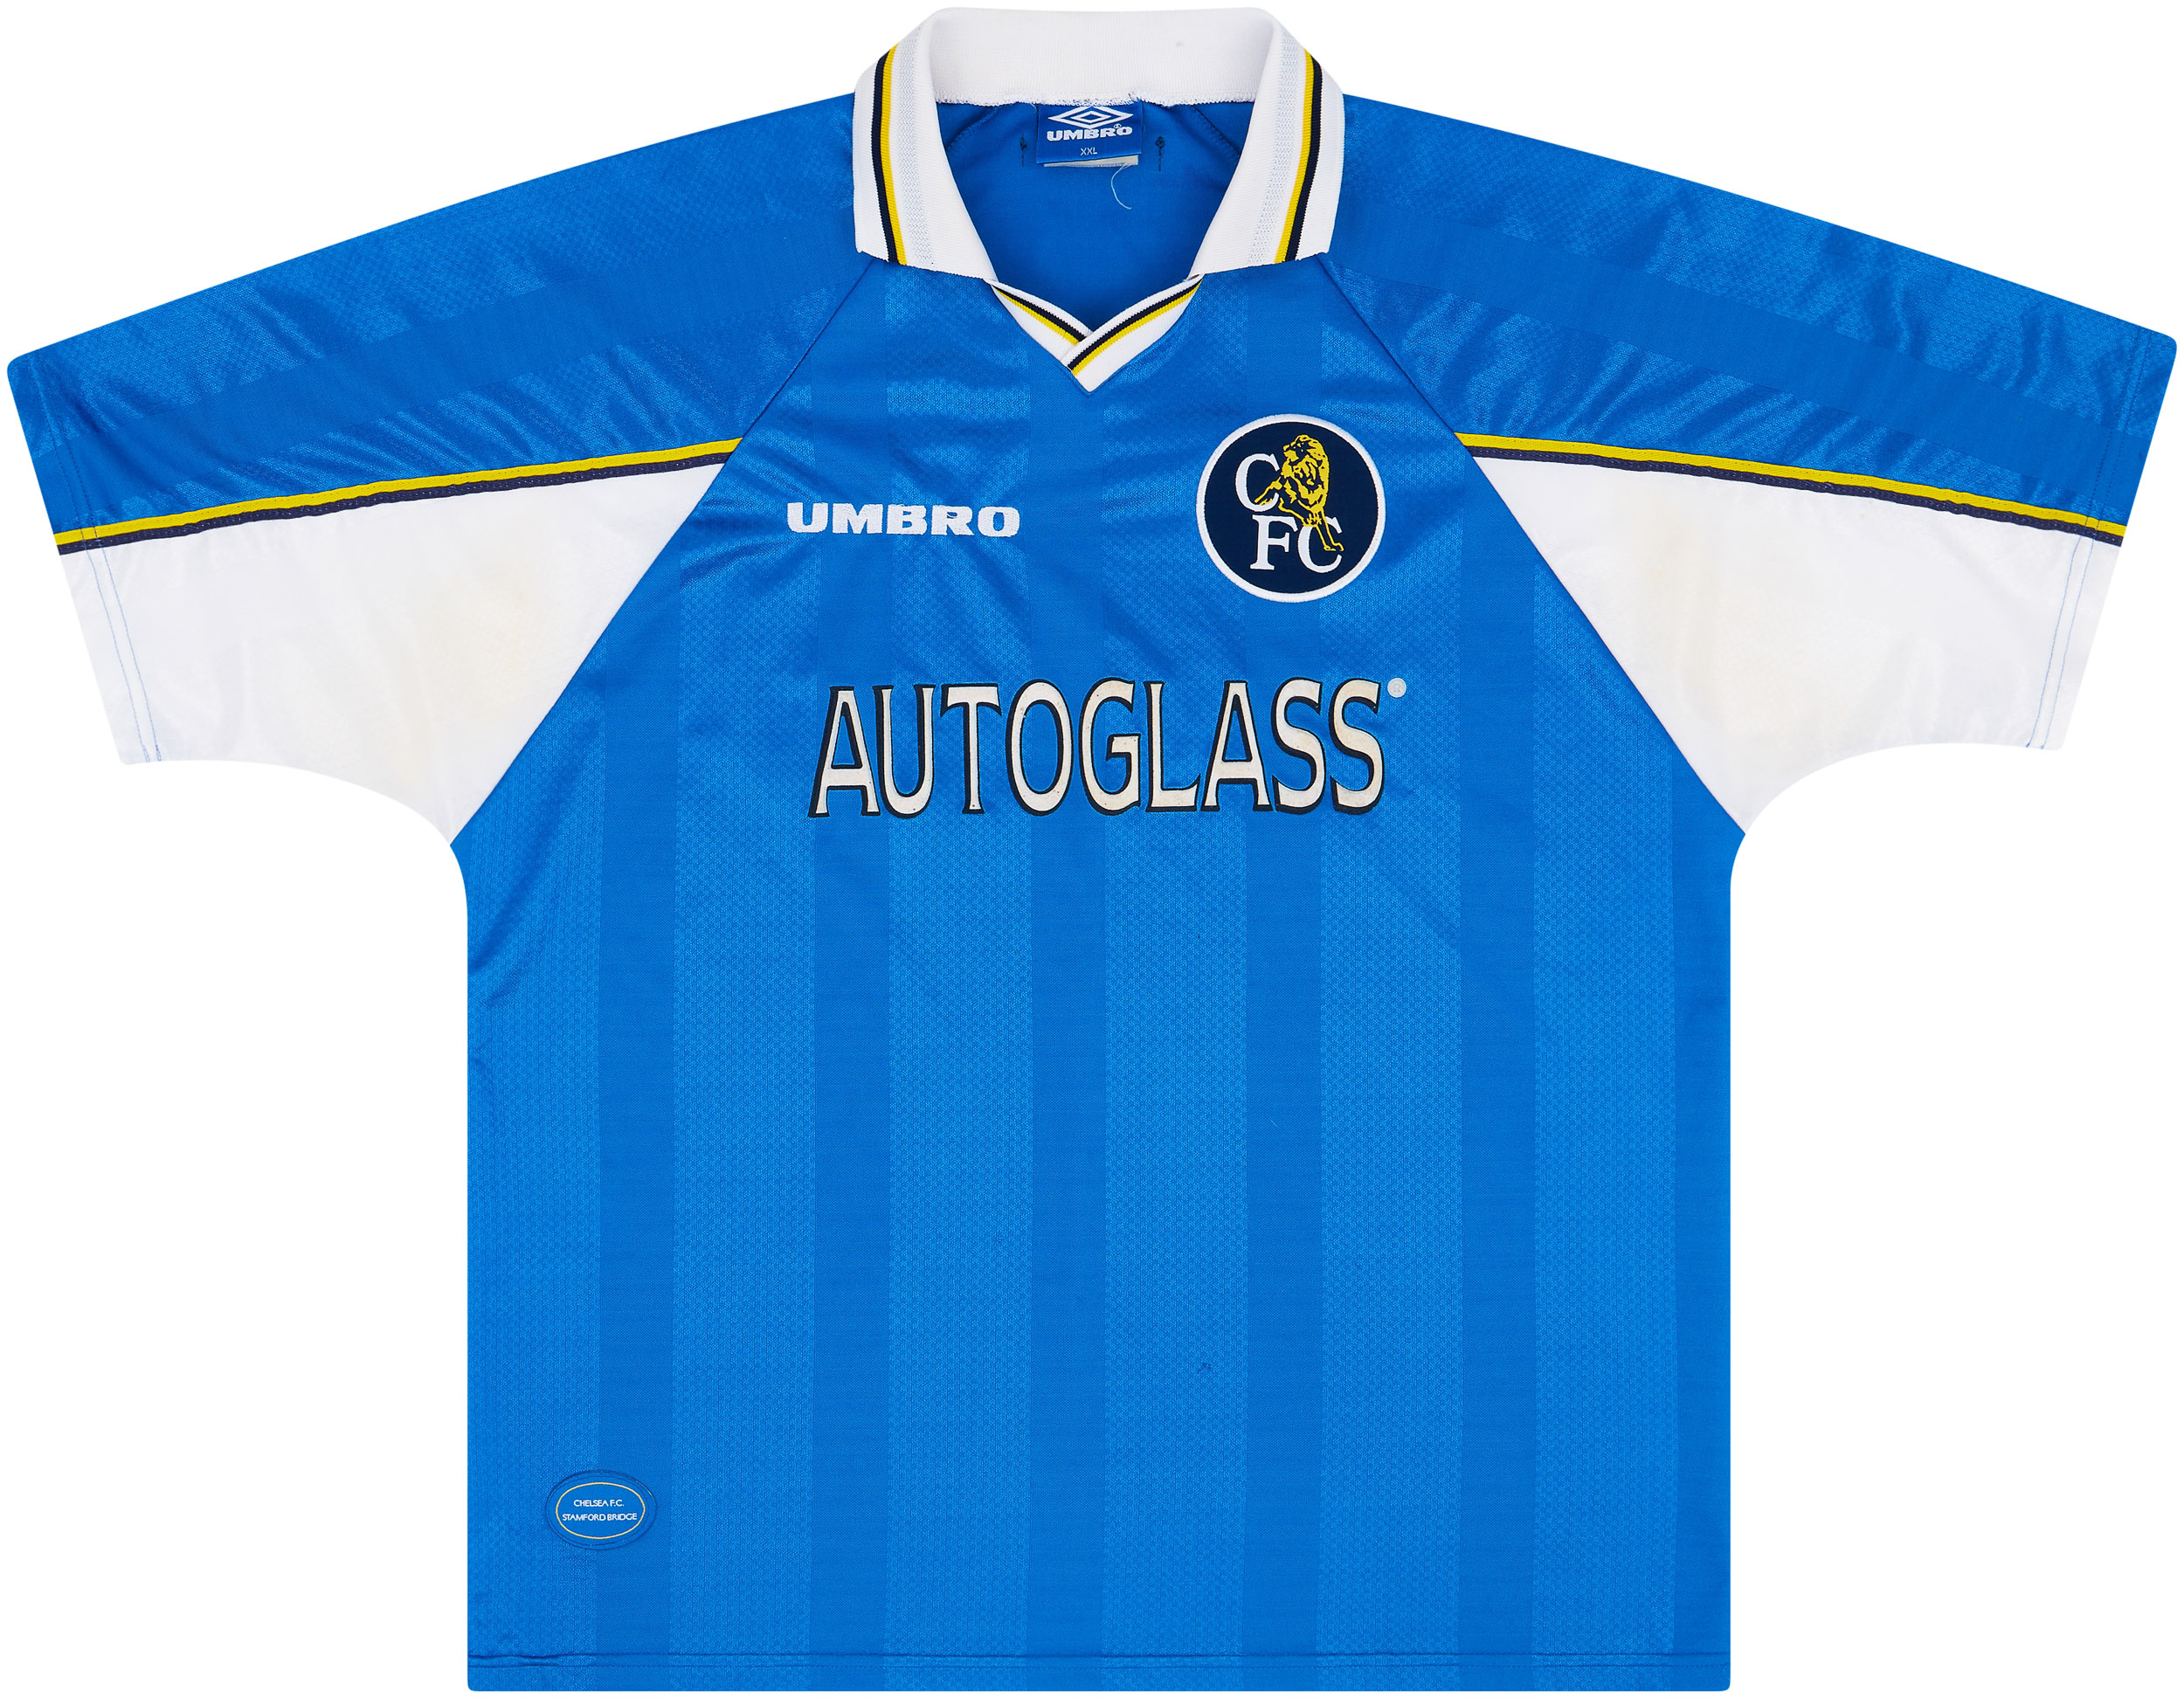 1997-99 Chelsea Home Shirt - Very Good 7/10 - ()